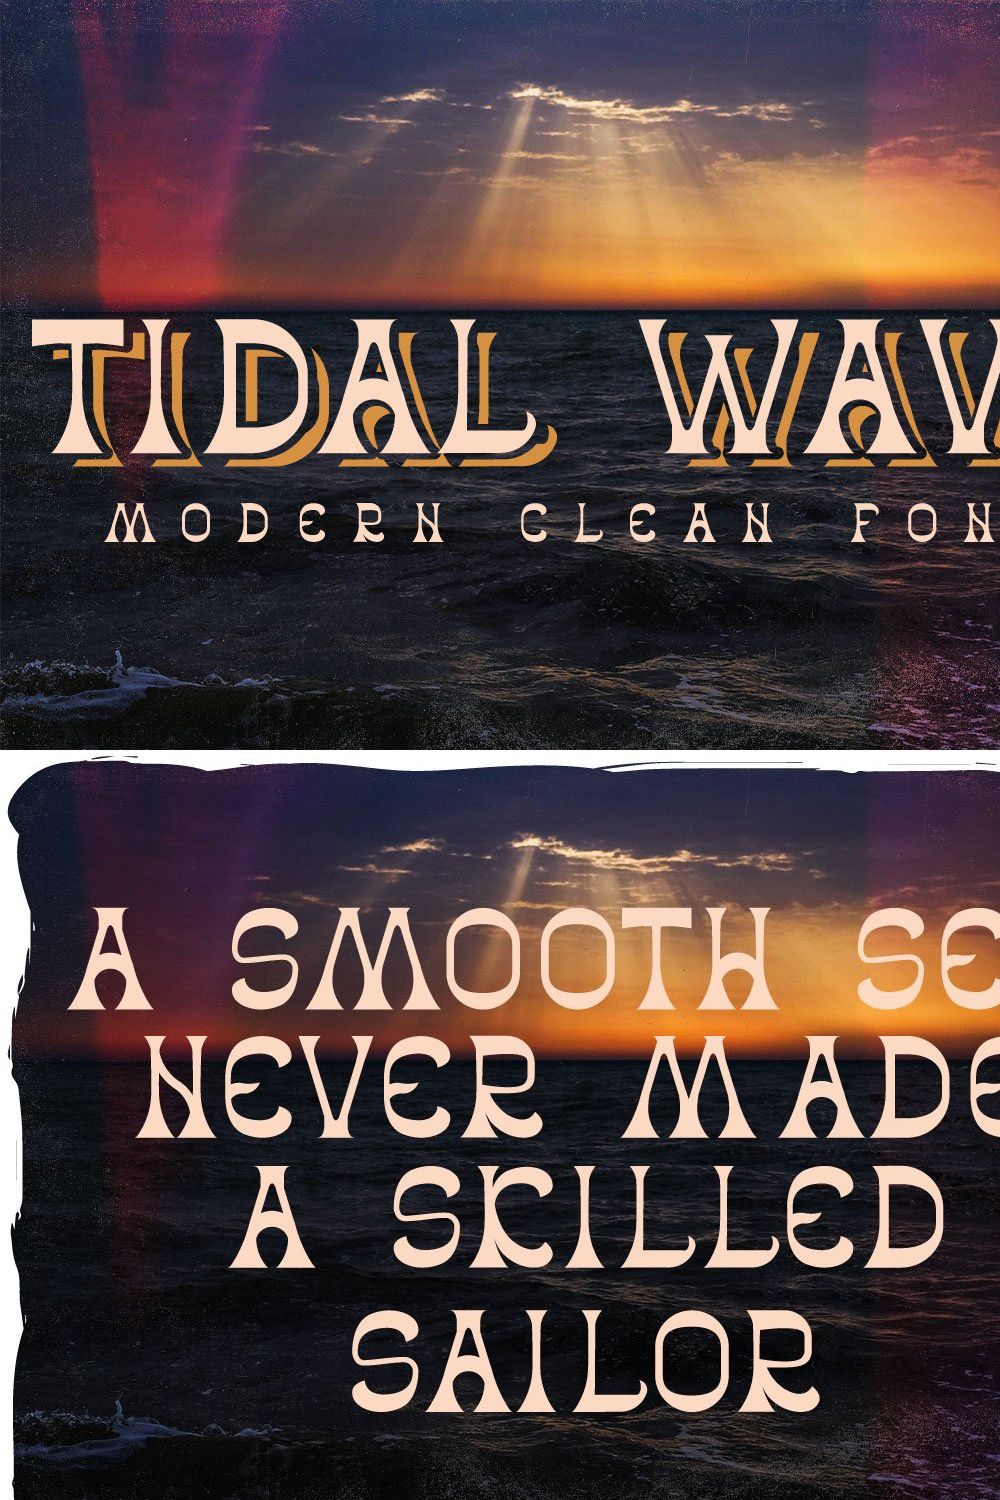 Tidal wave font pinterest preview image.